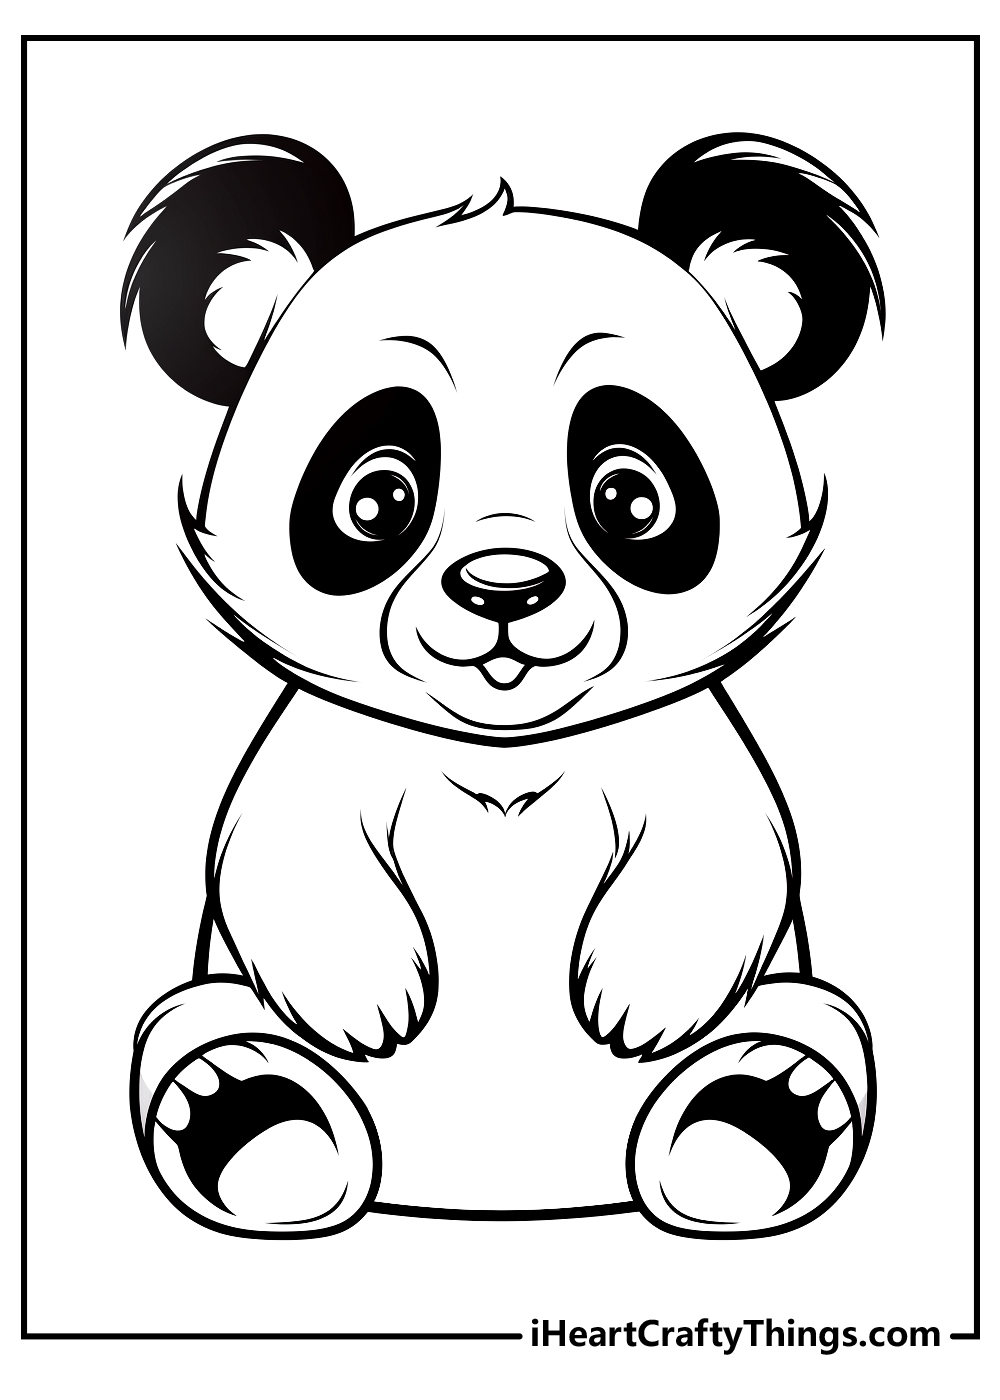 free panda coloring pages